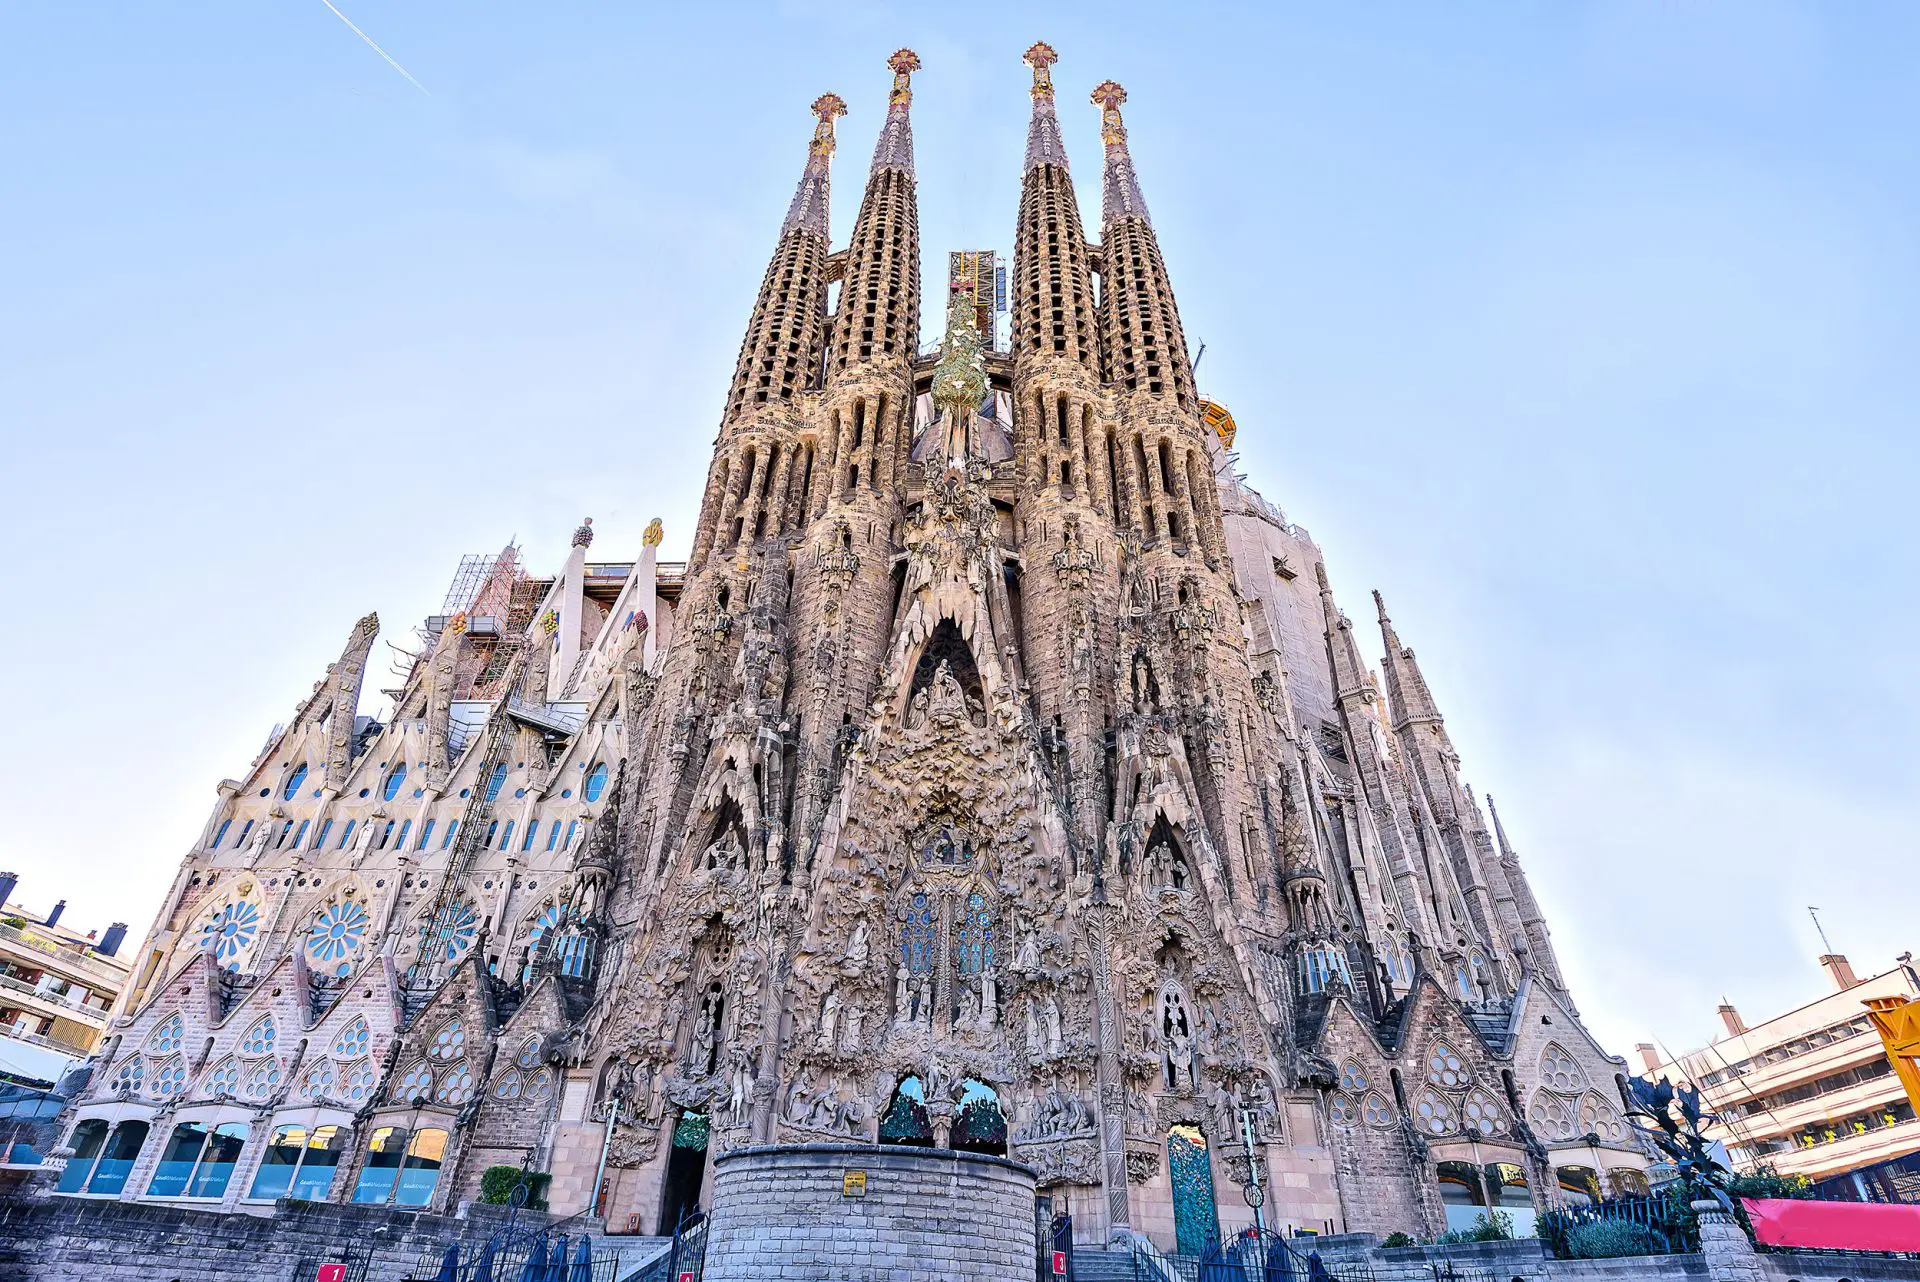 Admira la imponente vista desde la Cúpula de la Sagrada Familia de Antoni Gaudí